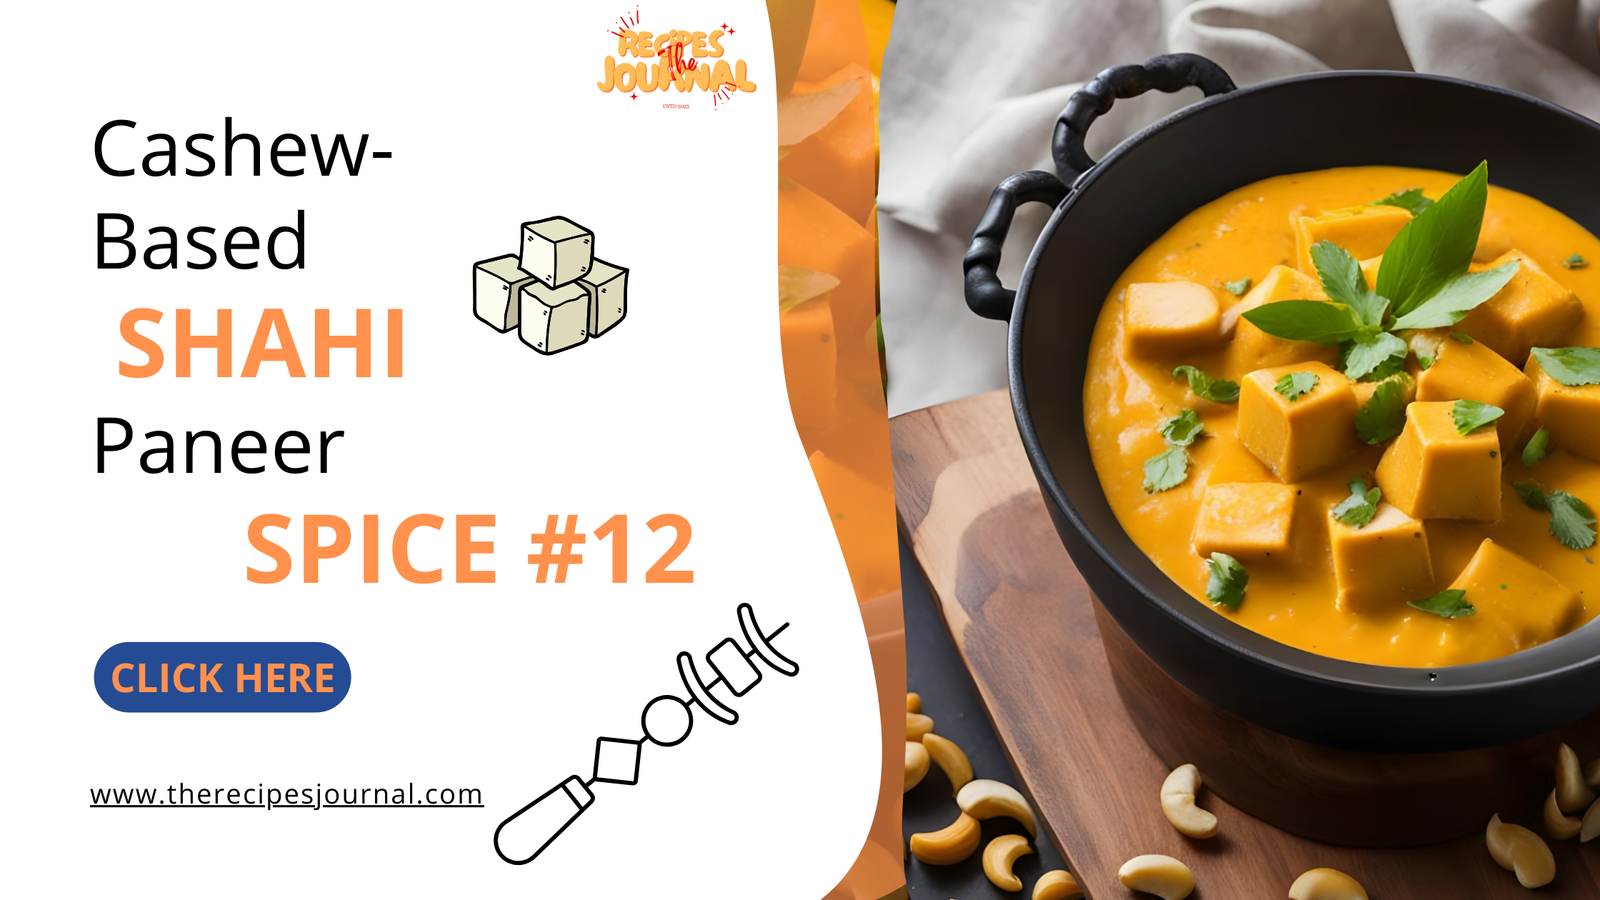 Cashew-Based Shahi Paneer : Spice #12